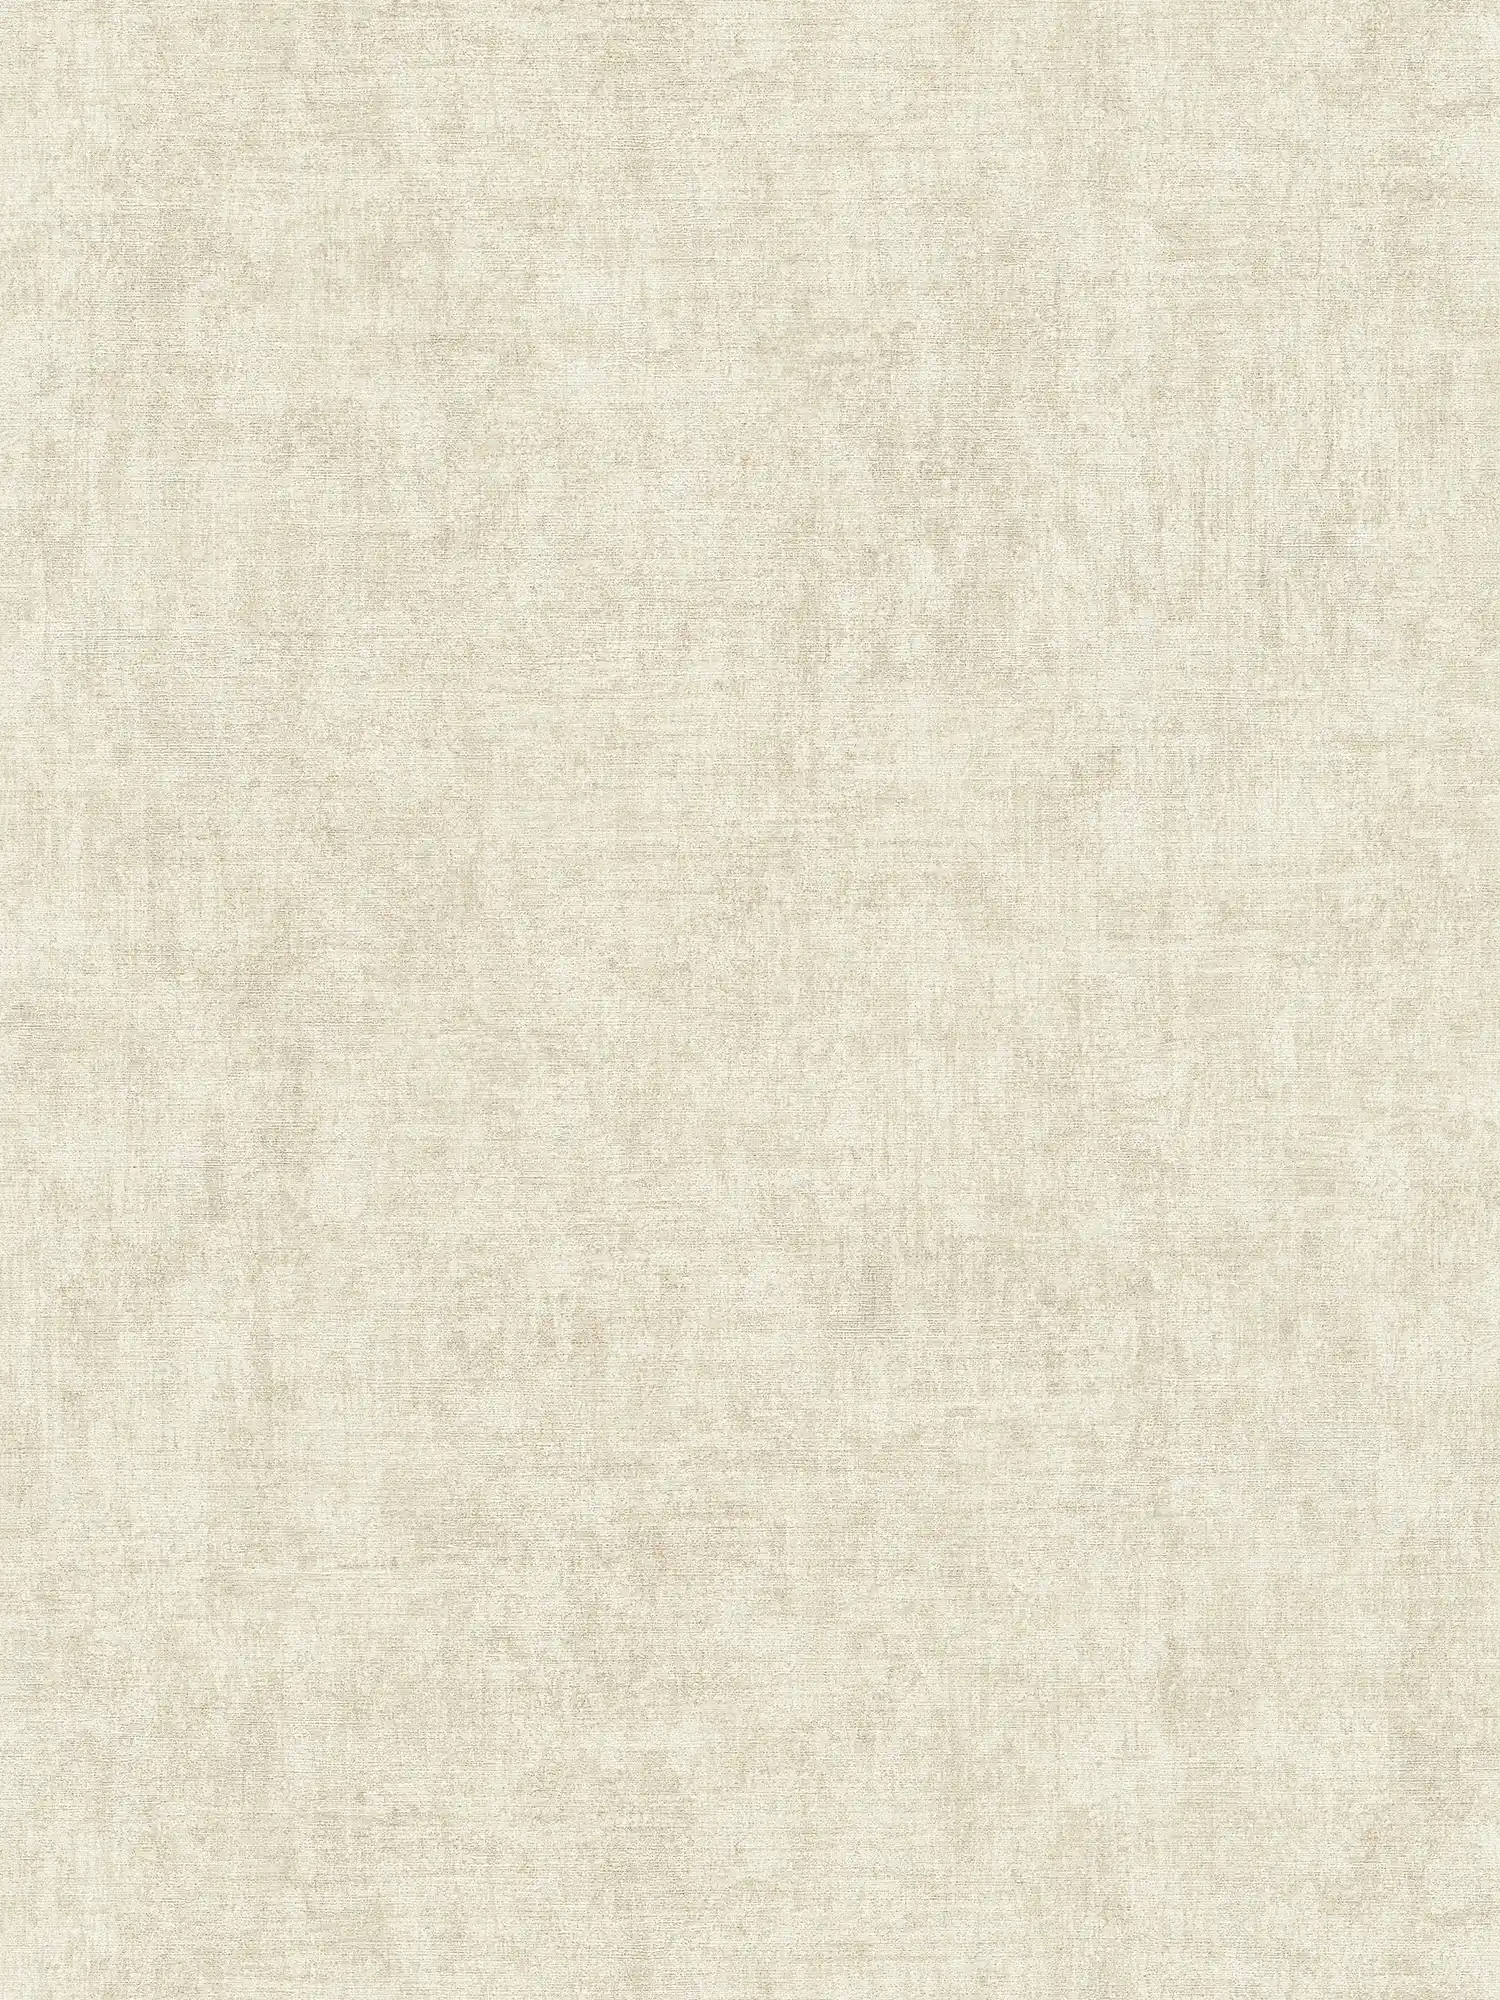 Non-woven wallpaper plain, mottled, textured pattern - cream
